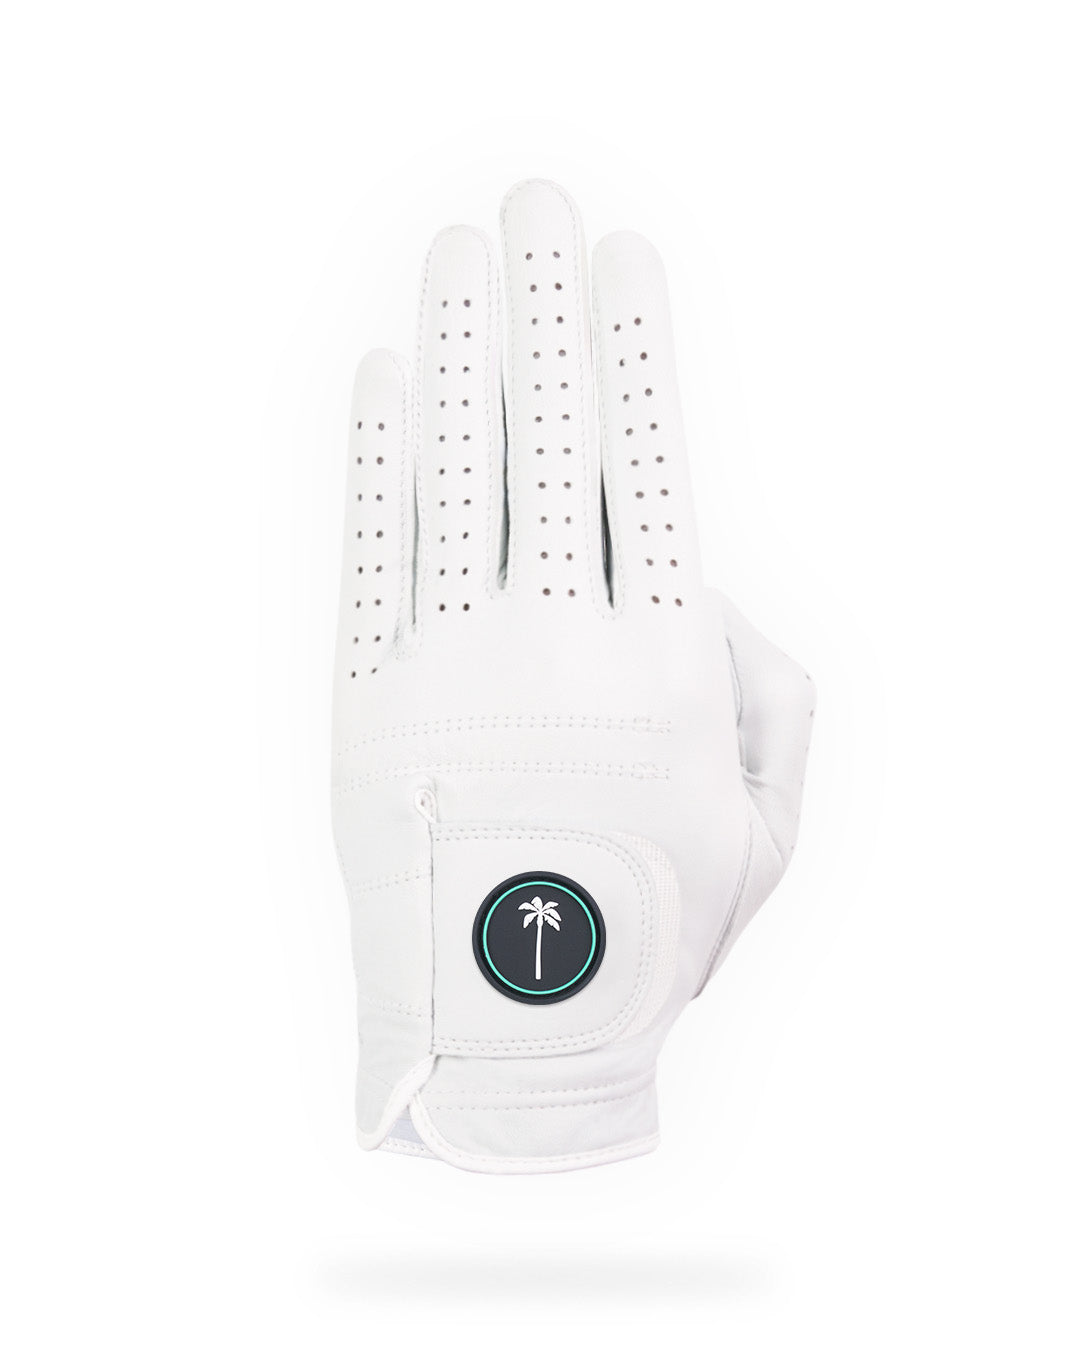 Men's Canvas Glove (White) - Palm Golf Co.